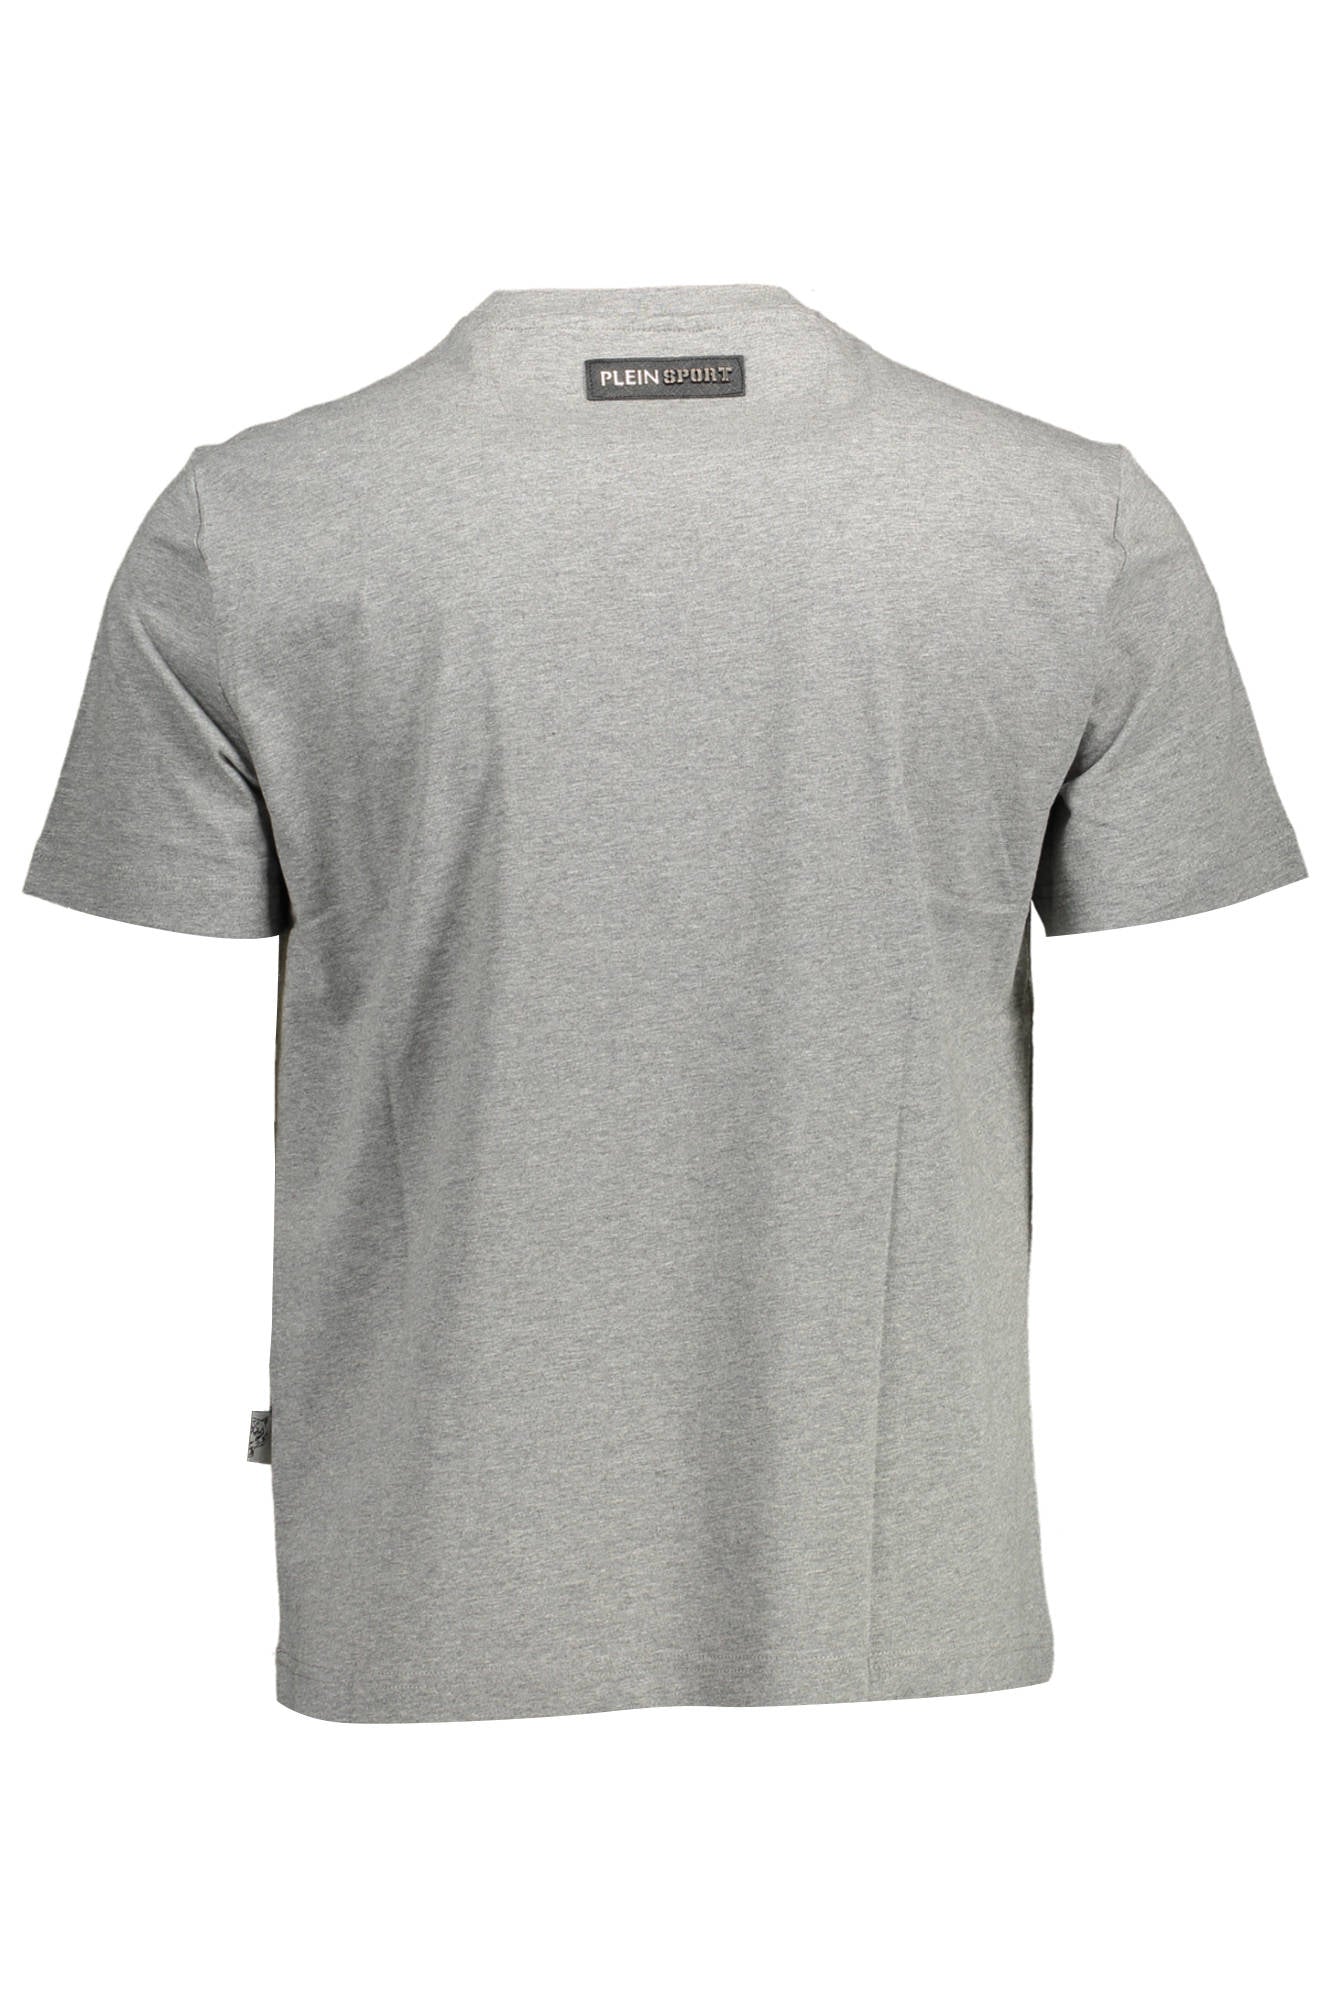 Plein Sport Gray T-Shirt - Fizigo